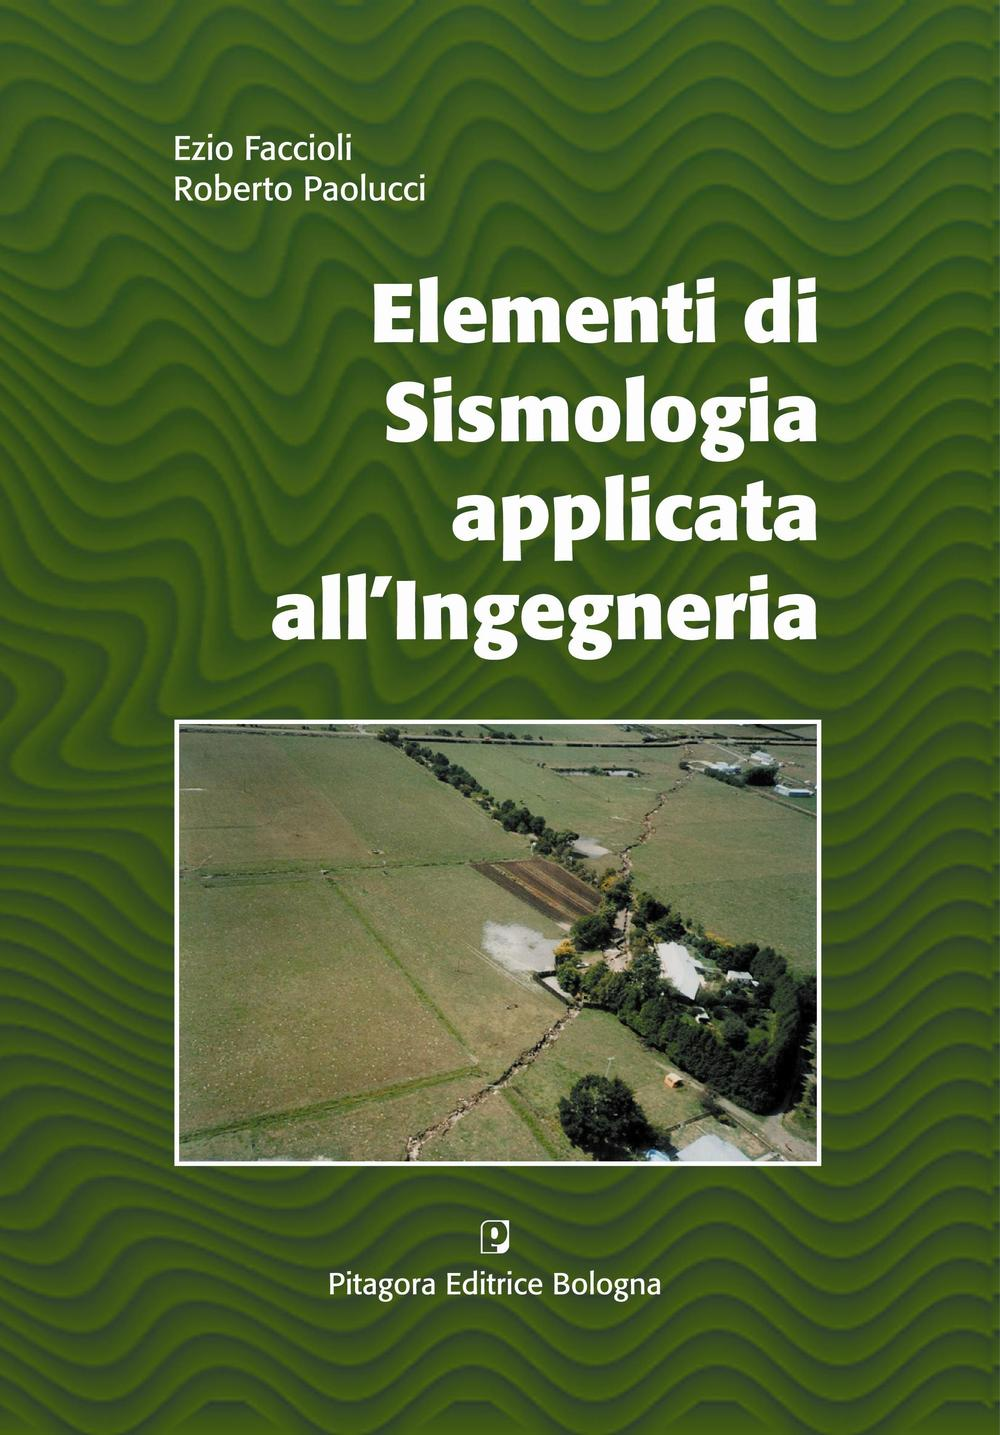 Image of Elementi di sismologia applicata all'ingegneria